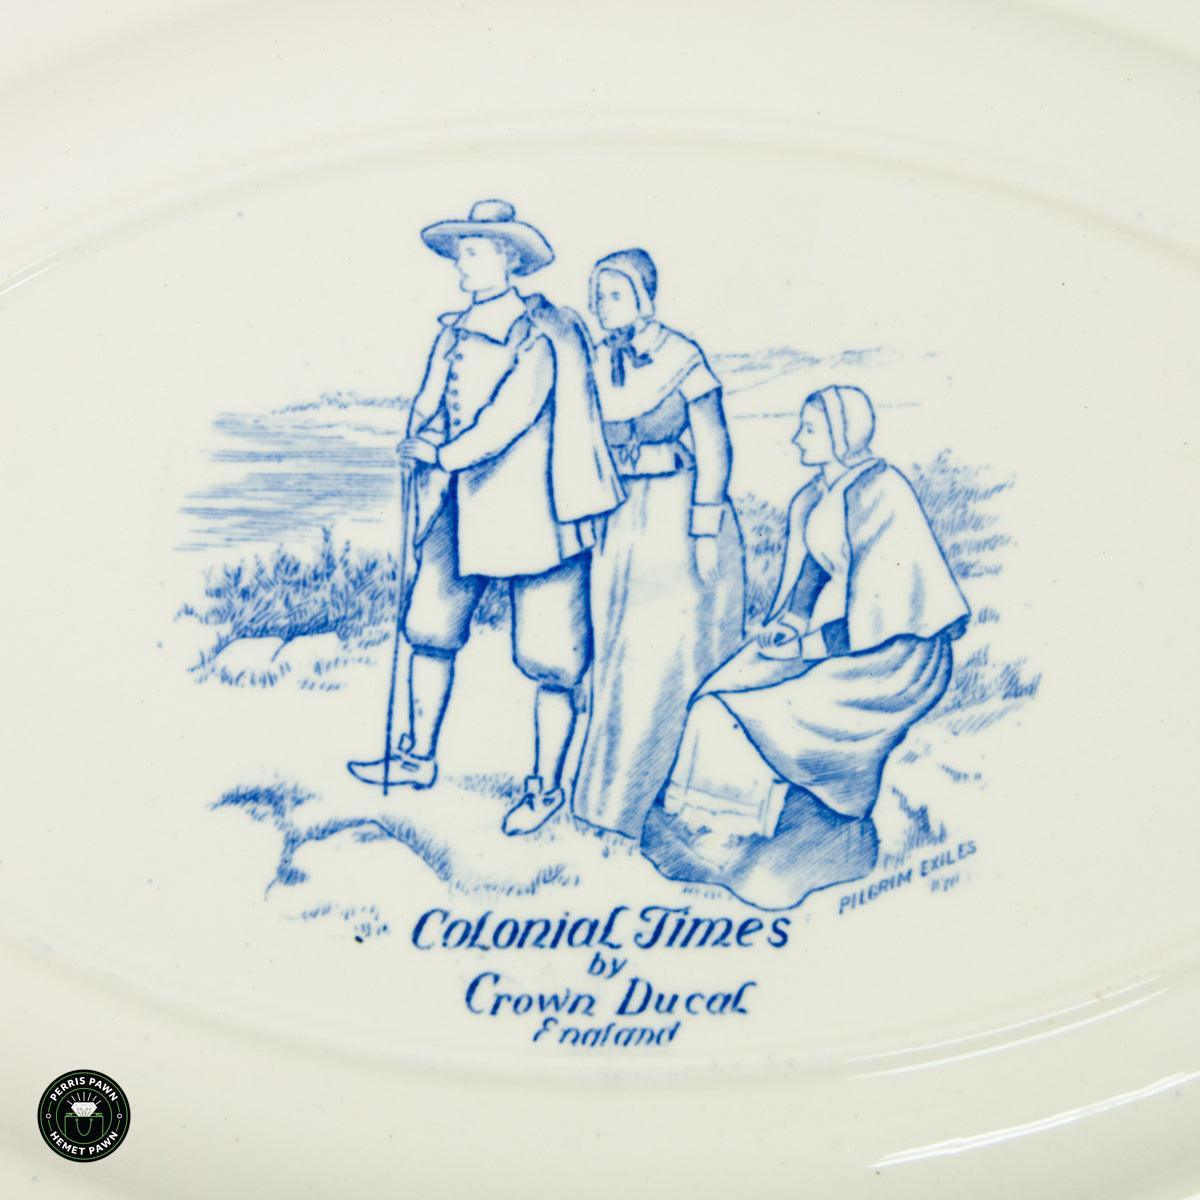 Crown Ducal Oval Serving Platter 